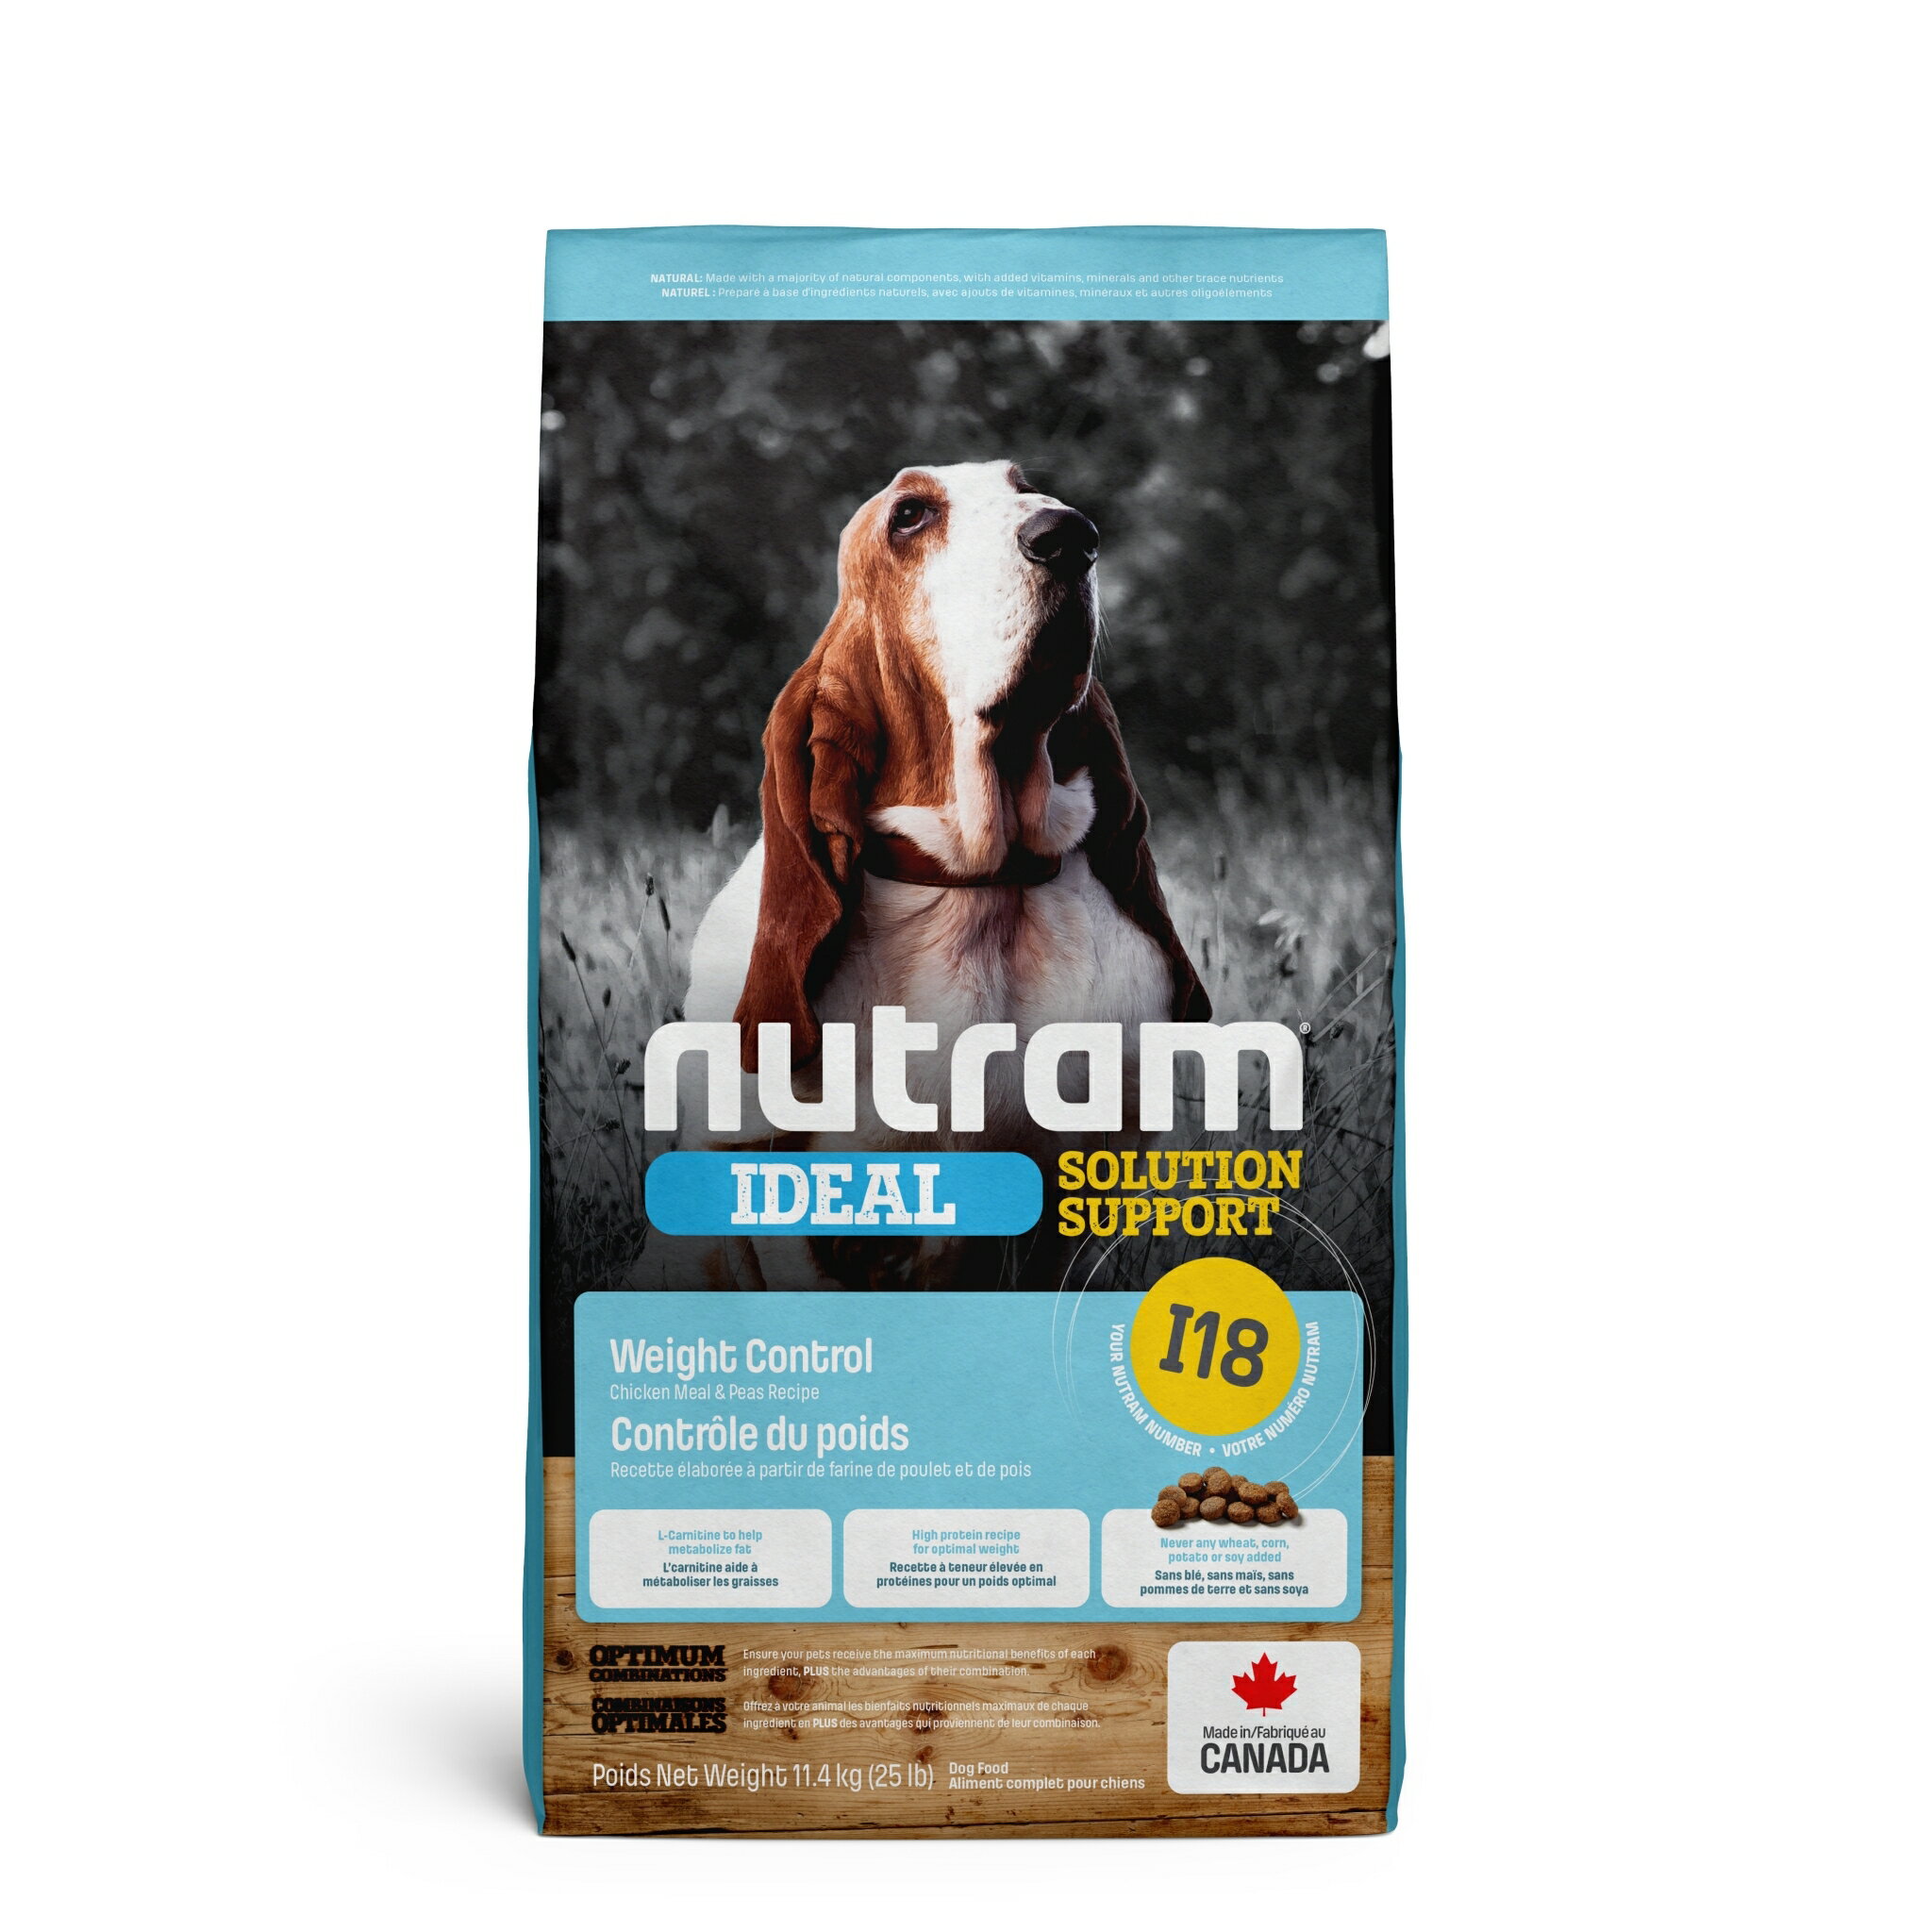 Nutram紐頓 - I18體重控制全齡犬(雞肉+豌豆) 11.4Kg